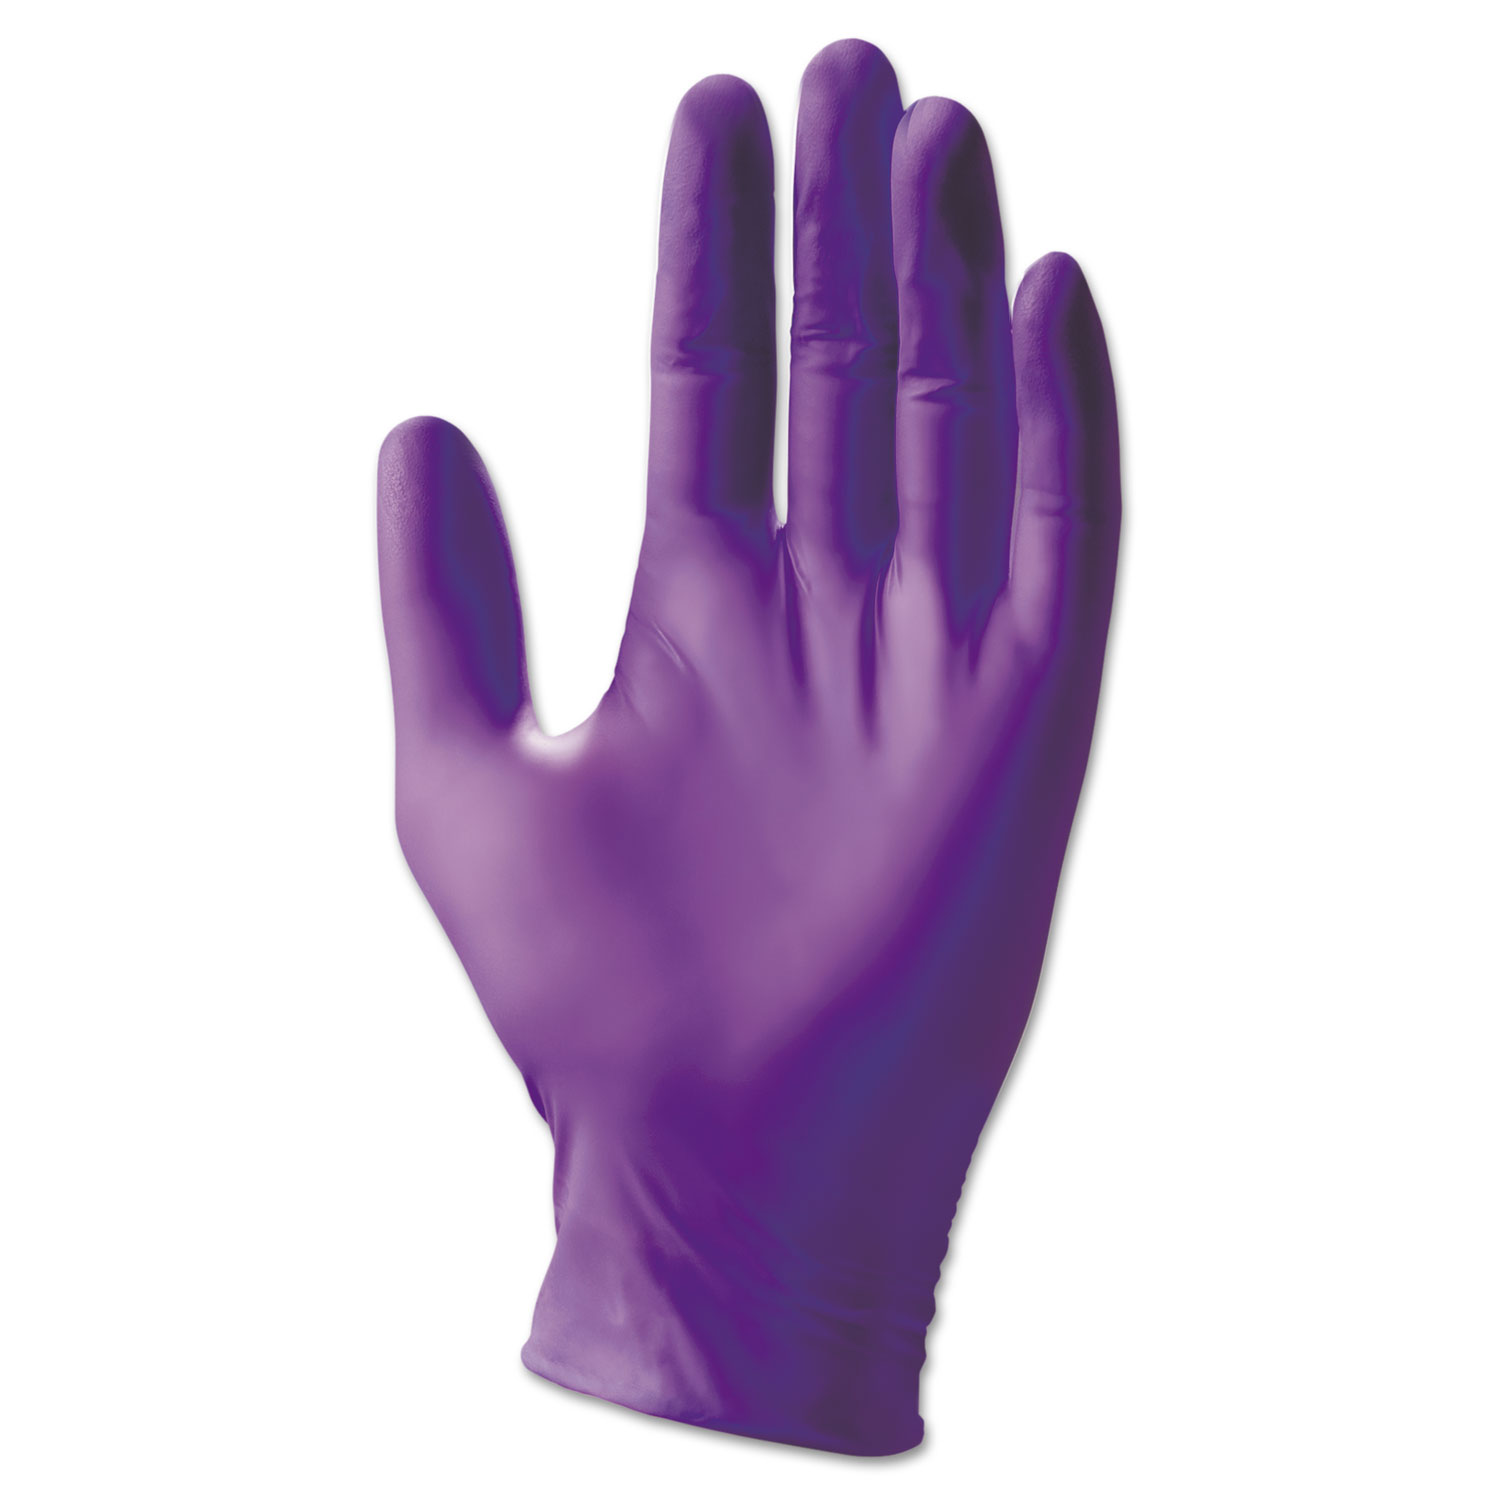  Kimberly-Clark Professional* KCC 55093 PURPLE NITRILE Sterile Exam Gloves, Powder-Free, 252 mm Length, Large, 50 Pair/Box (KCC55093) 